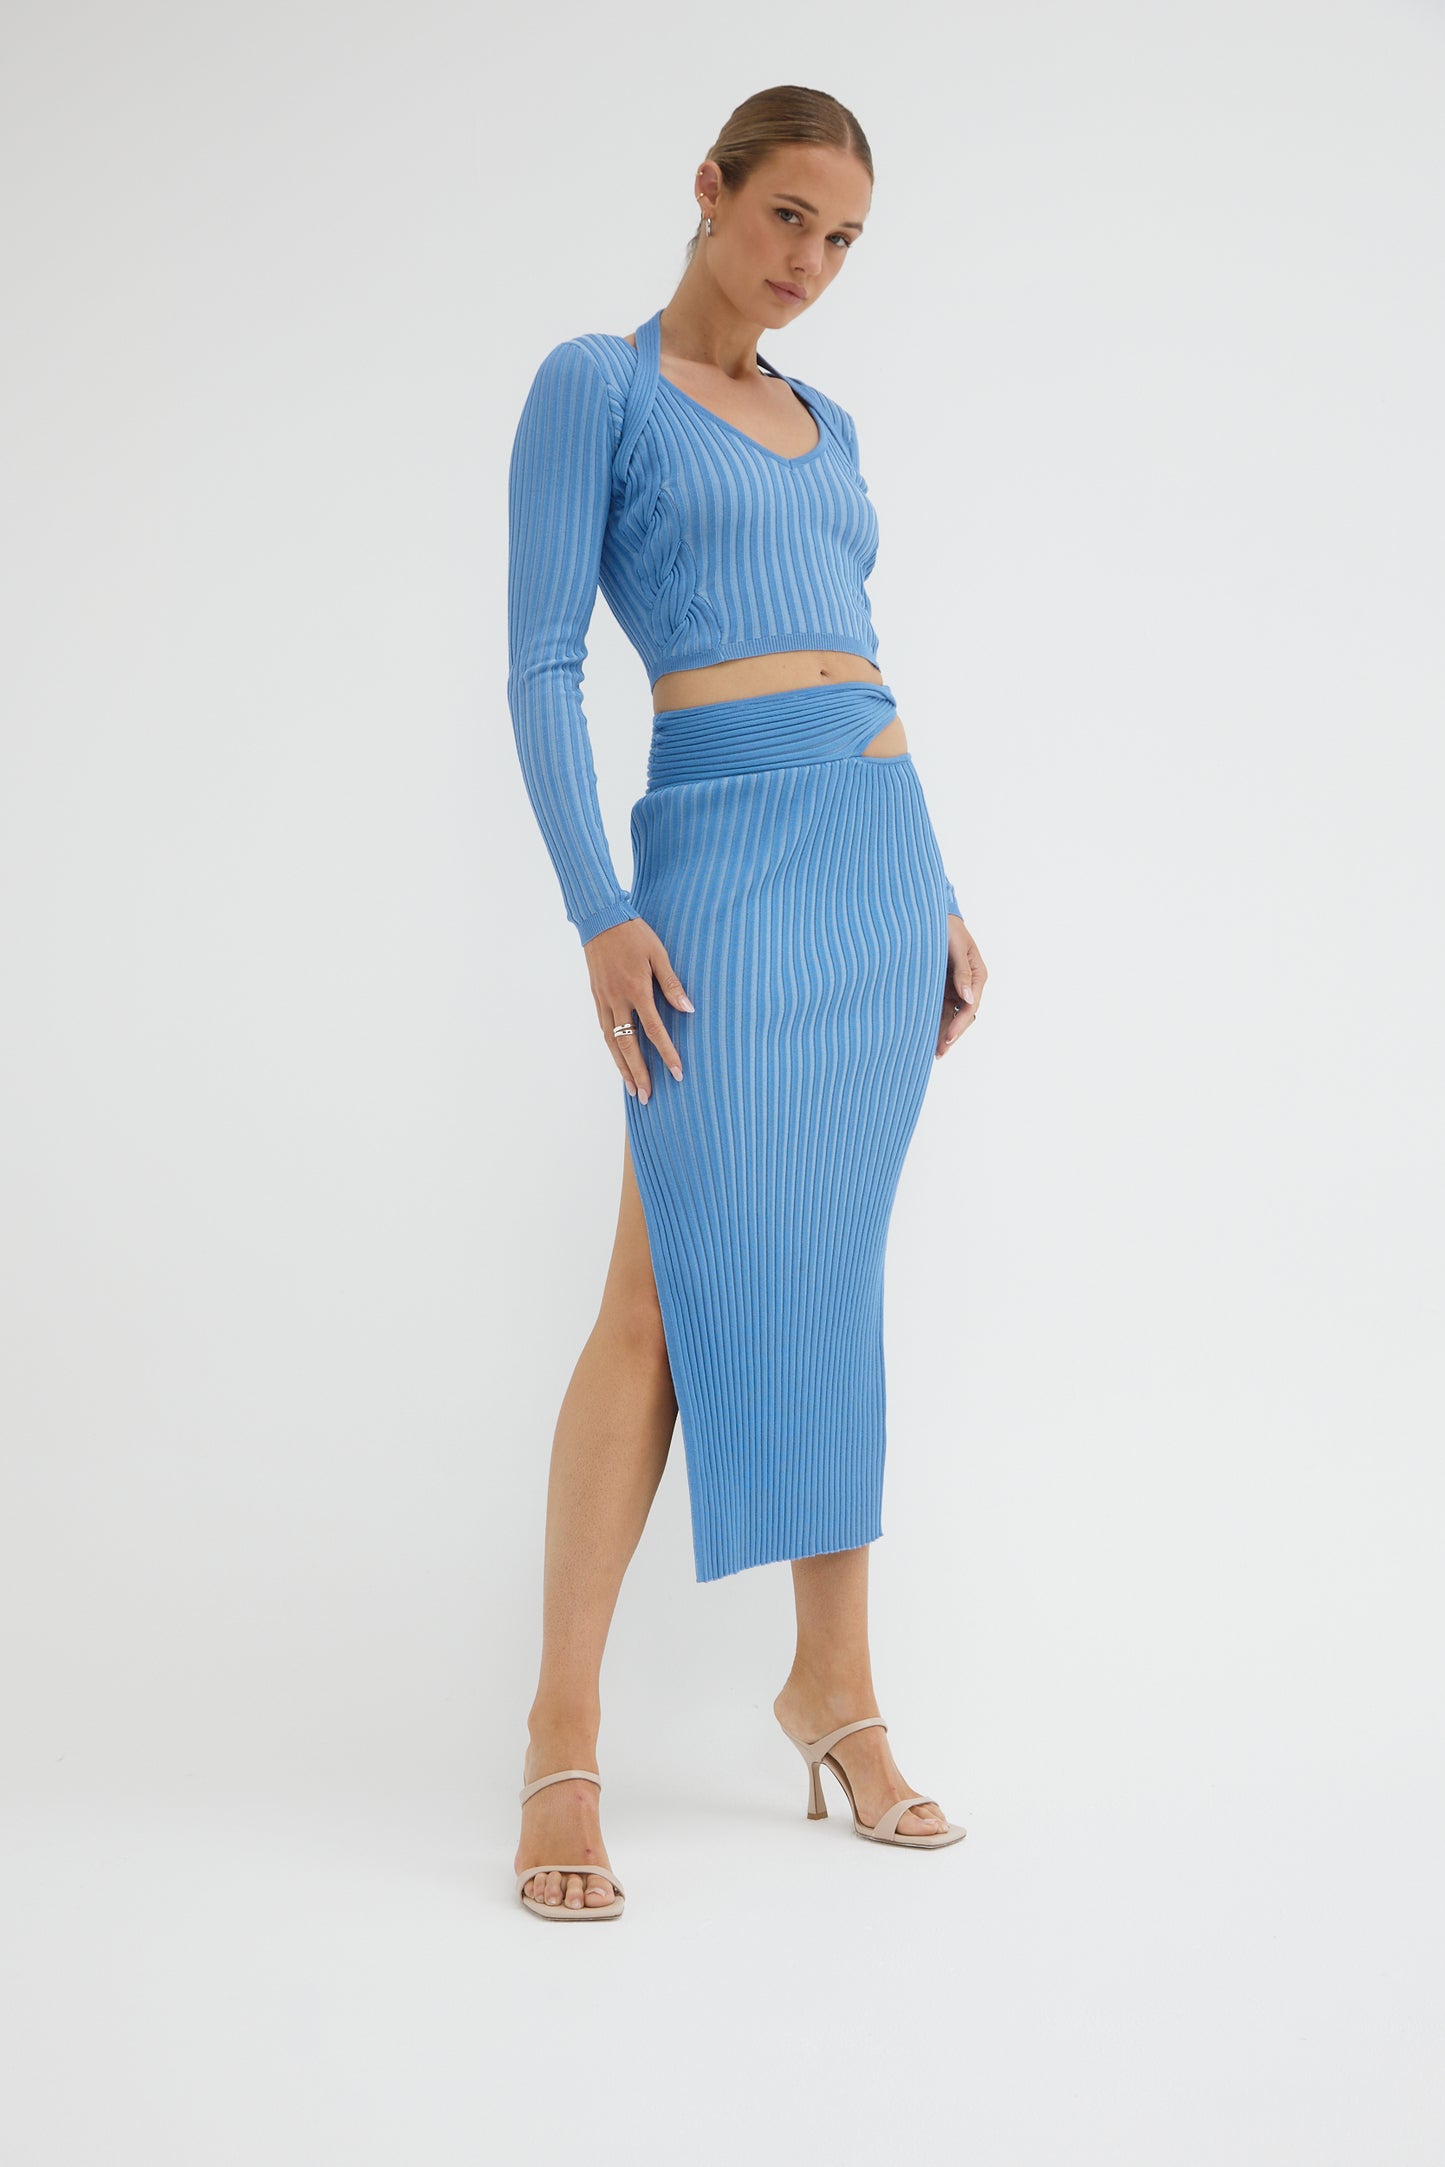 Sovere Studio women's Clothing Sydney Intwine knit Skirt Blue